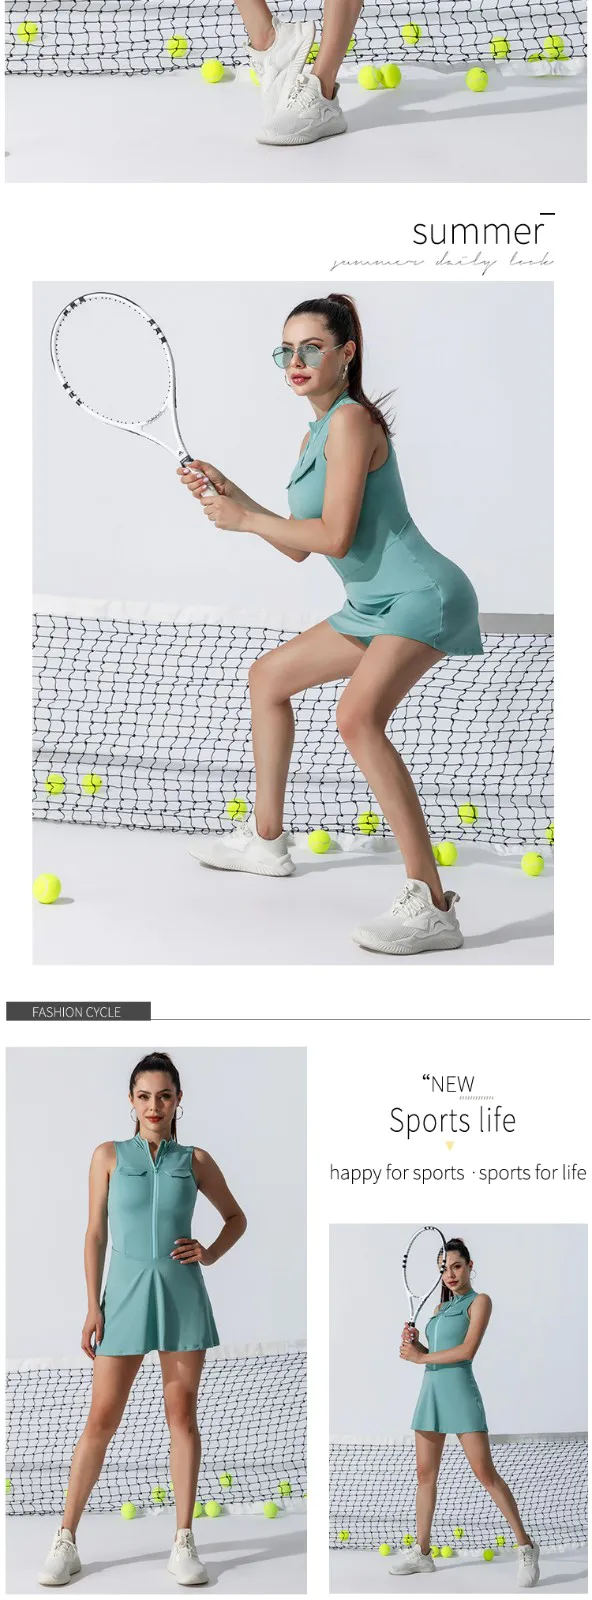 INGOR custom tennis women clothes solutions